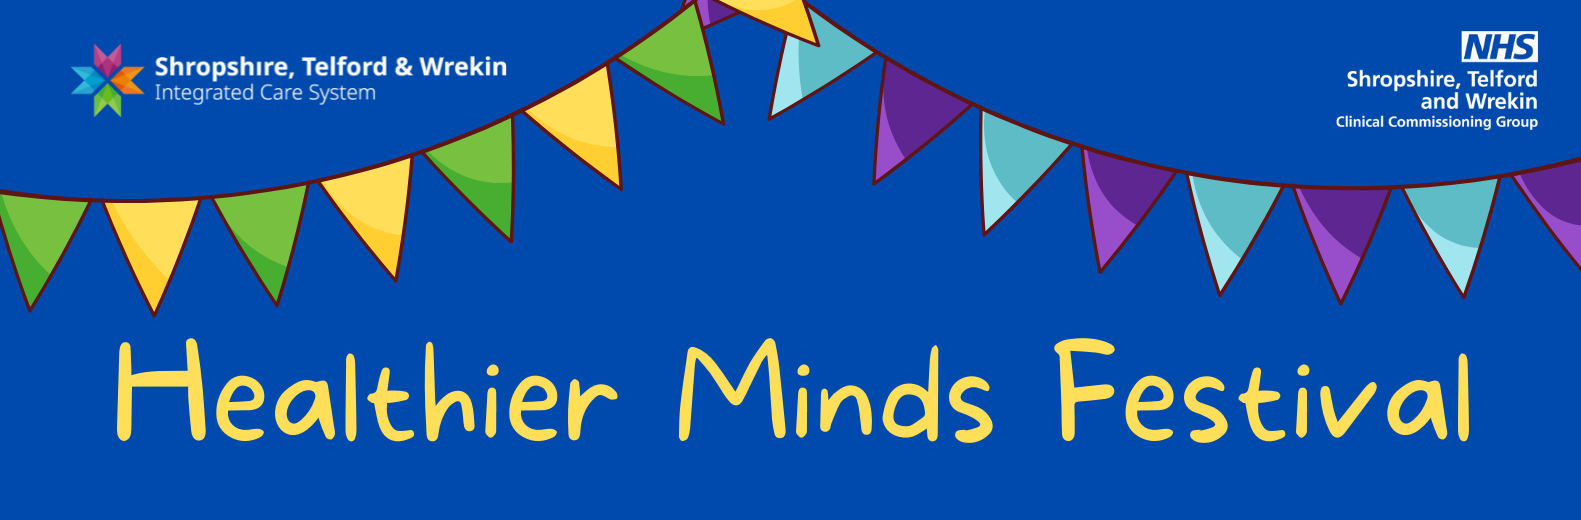 Banner image of Healthier Minds festival 2022 run by Shropshire Telford & Wrekin ICS